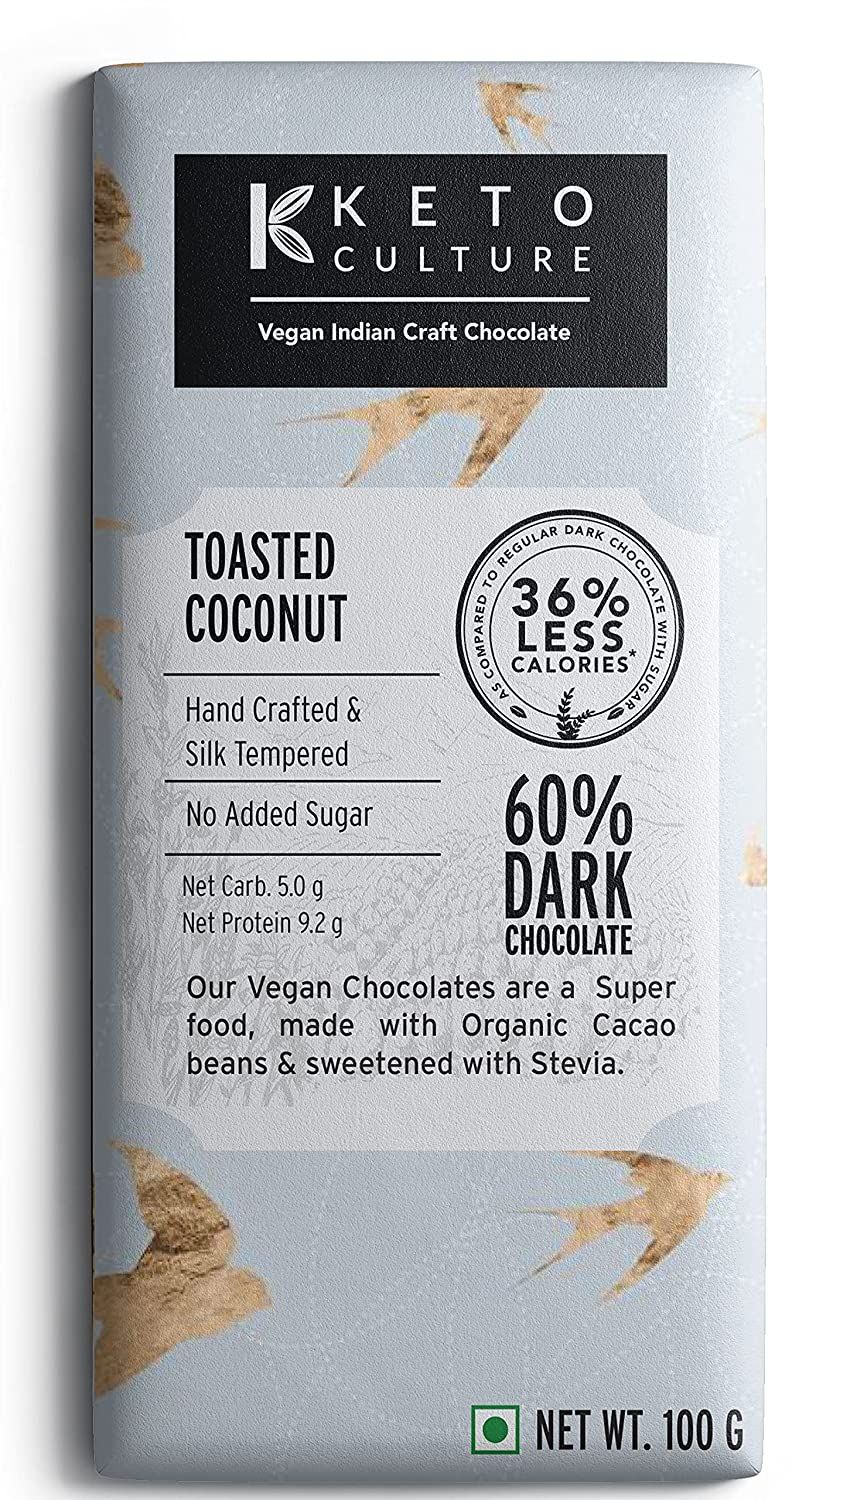 Keto Culture Coconut Vegan Dark Chocolate Image